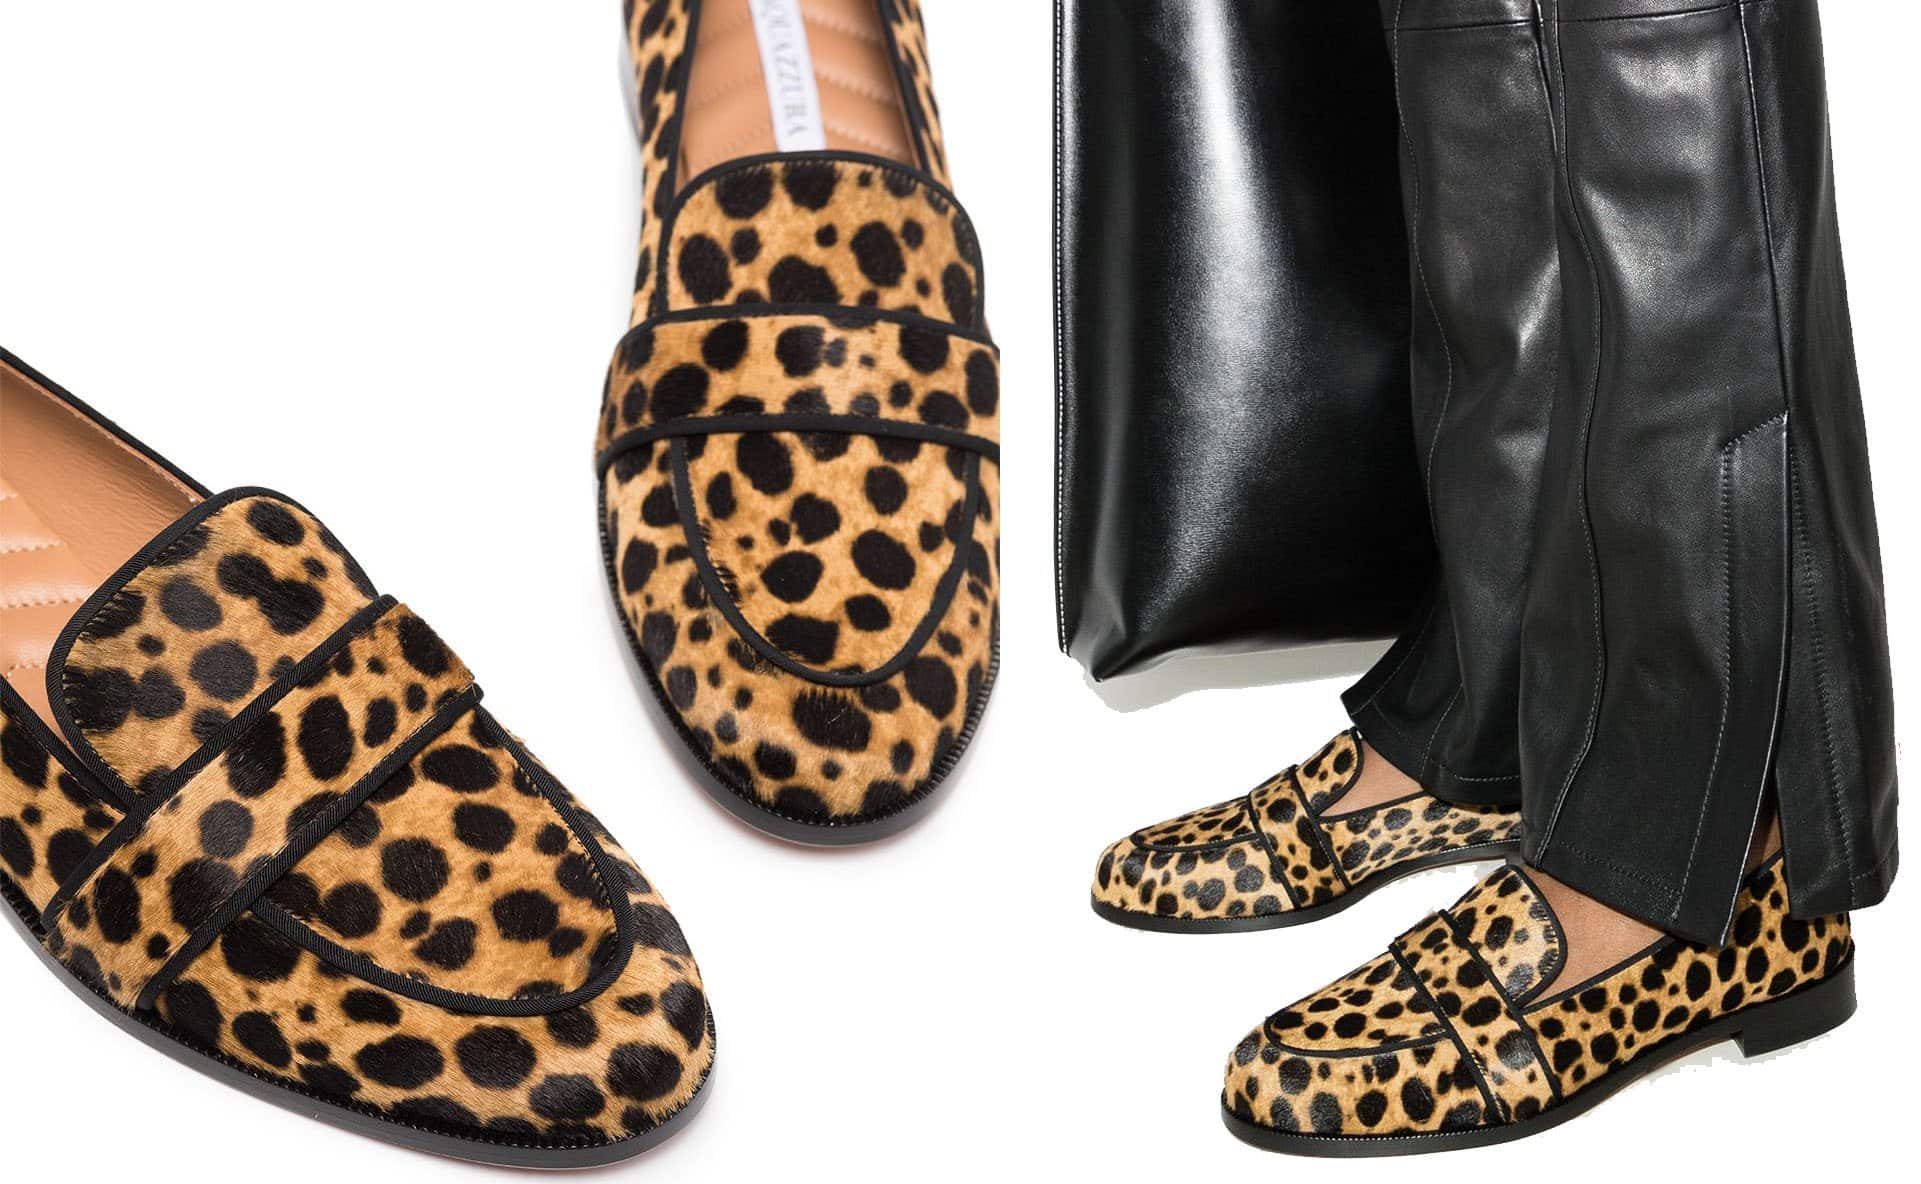 Cheetah prints have solid black spots as seen in Aquazzura's Martin flat loafers